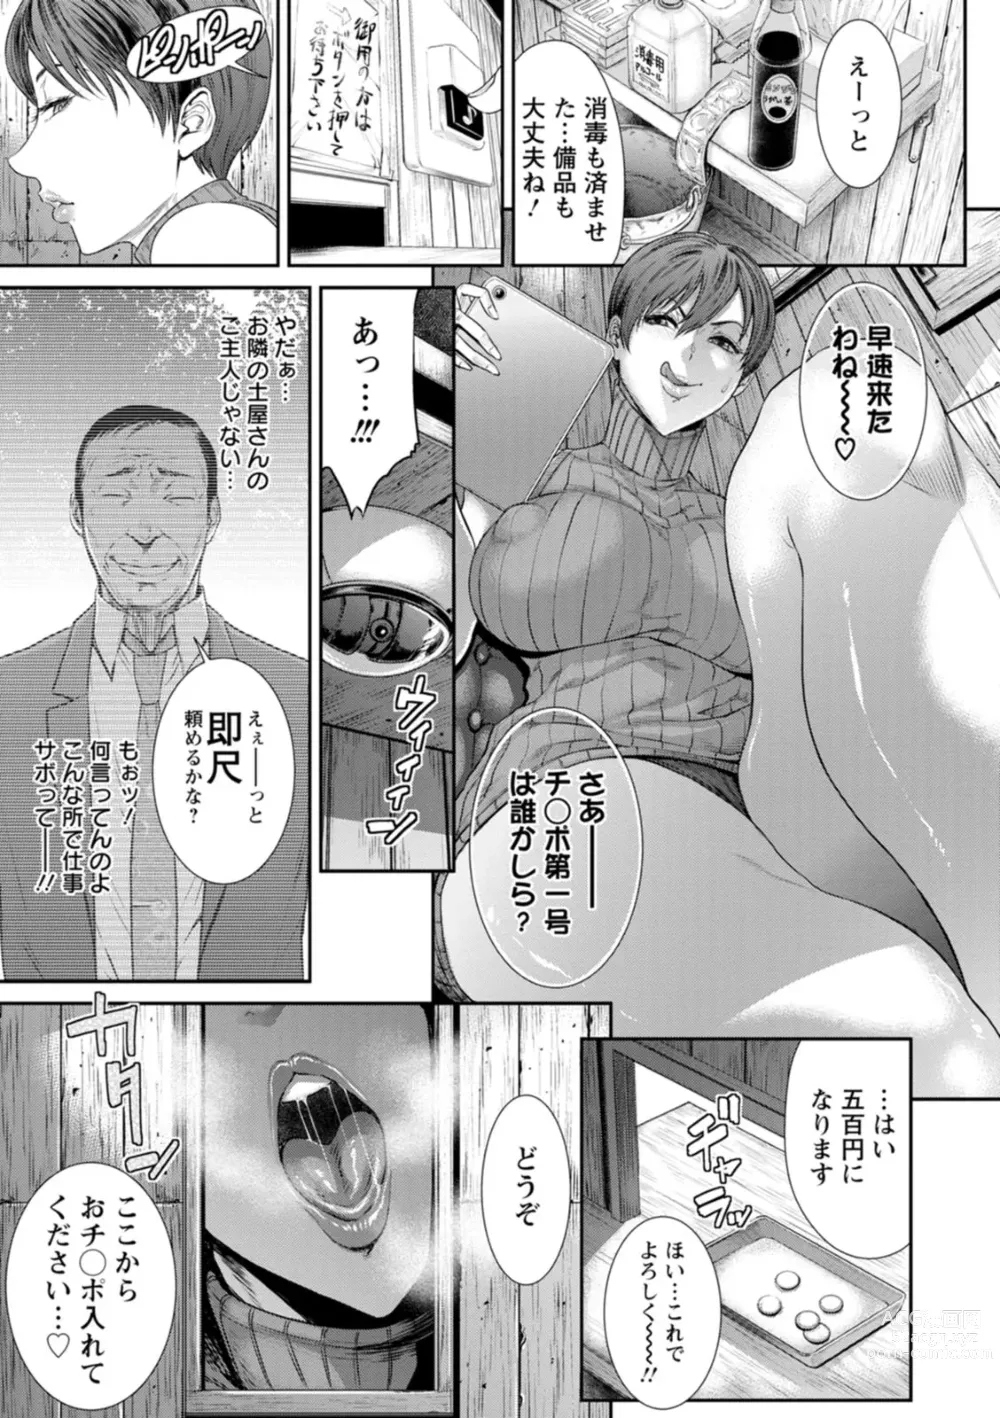 Page 11 of manga Obscene Box